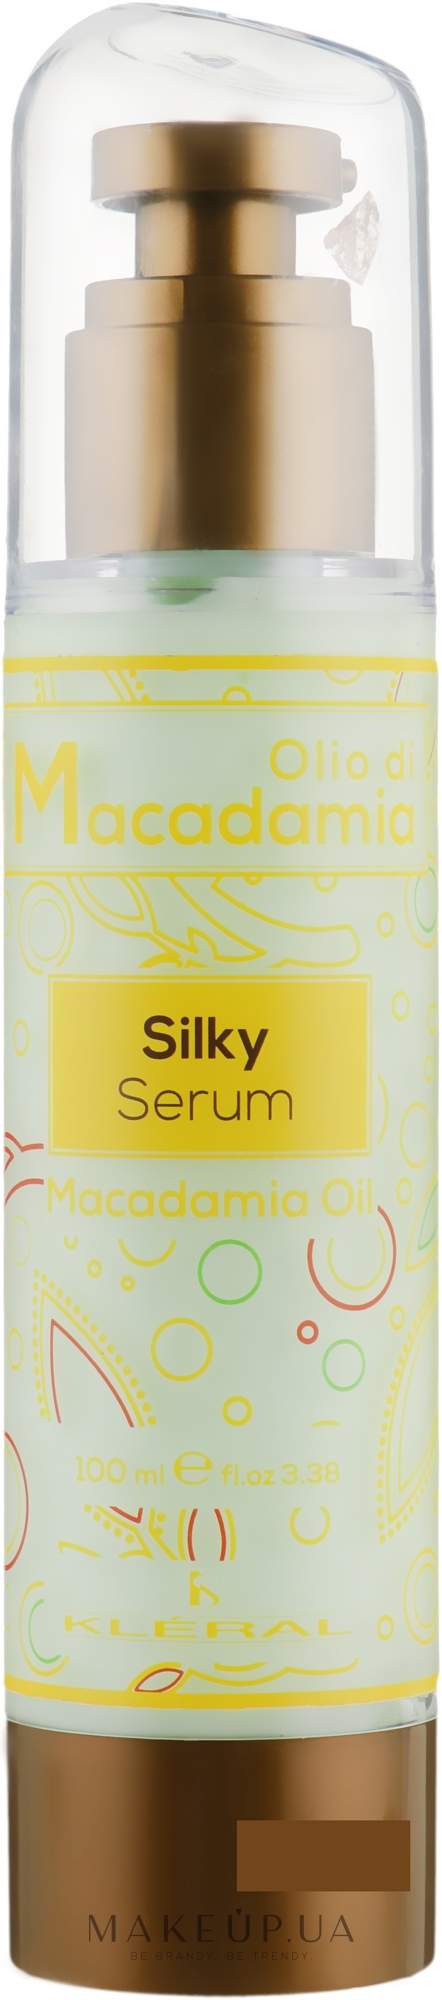 Флюид-шелк с маслом макадамии - Kleral System Olio Di Macadamia Silky Serum — фото 100ml